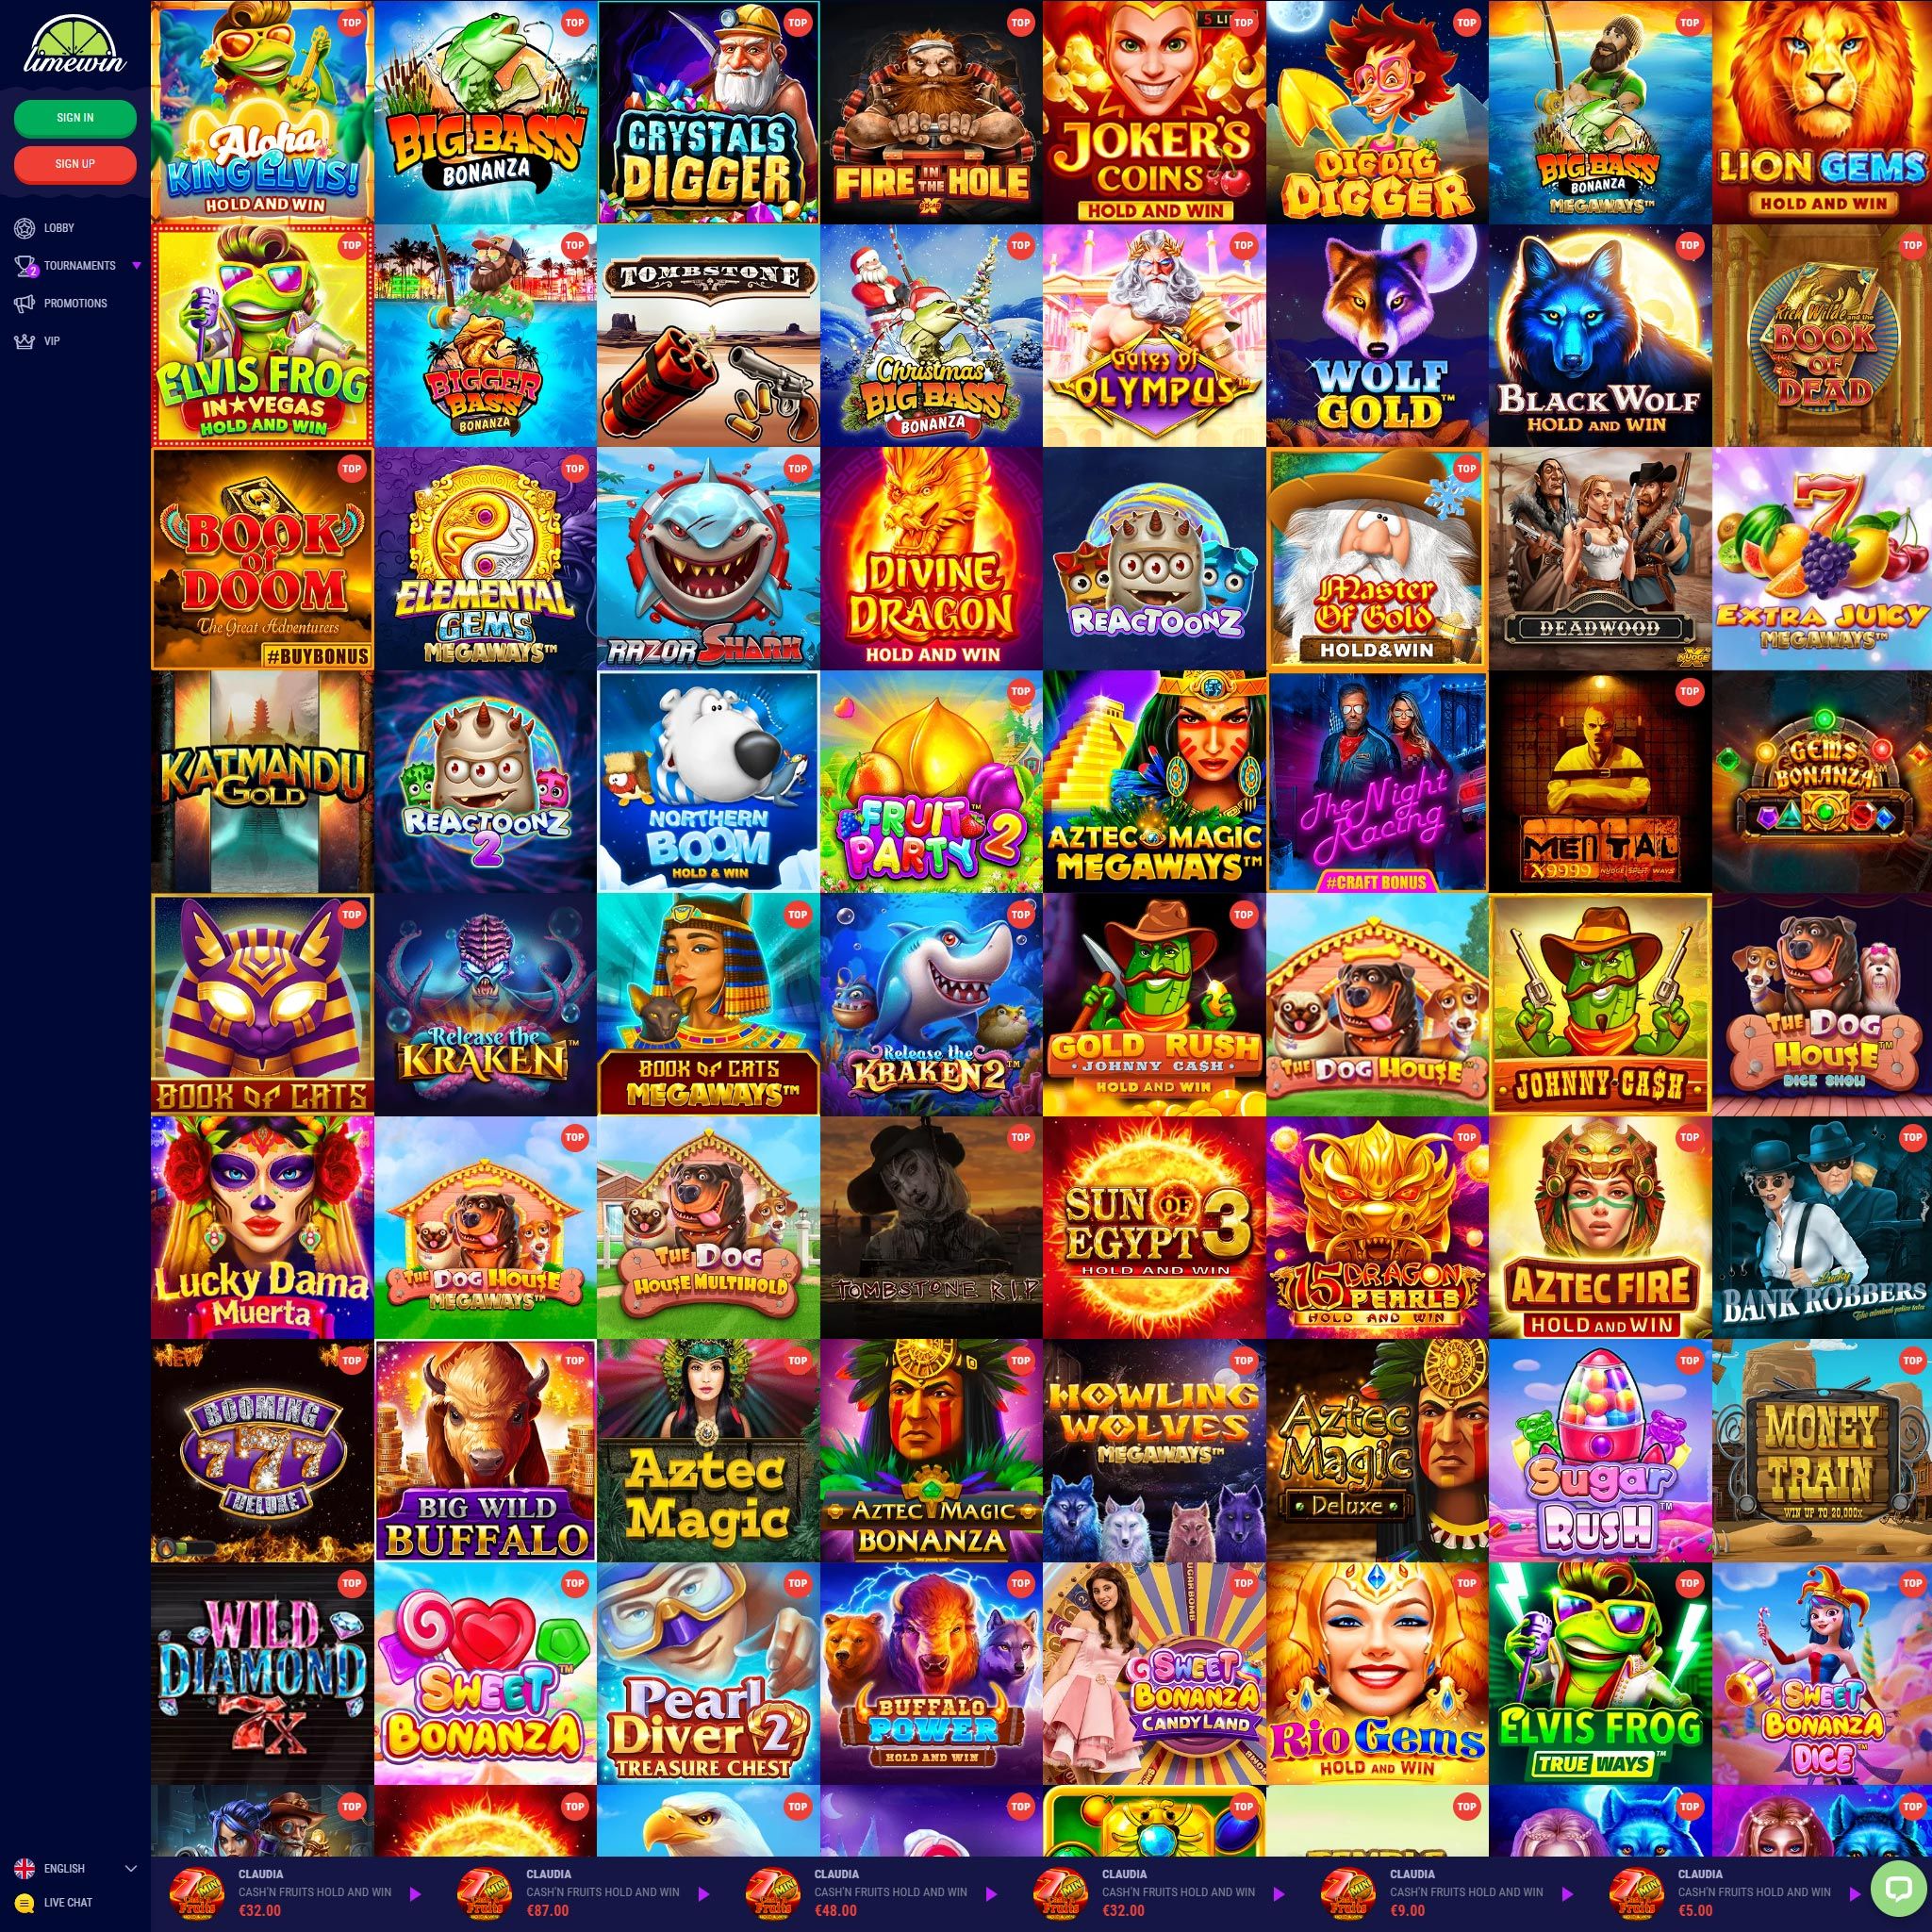 Limewin Casino full games catalogue